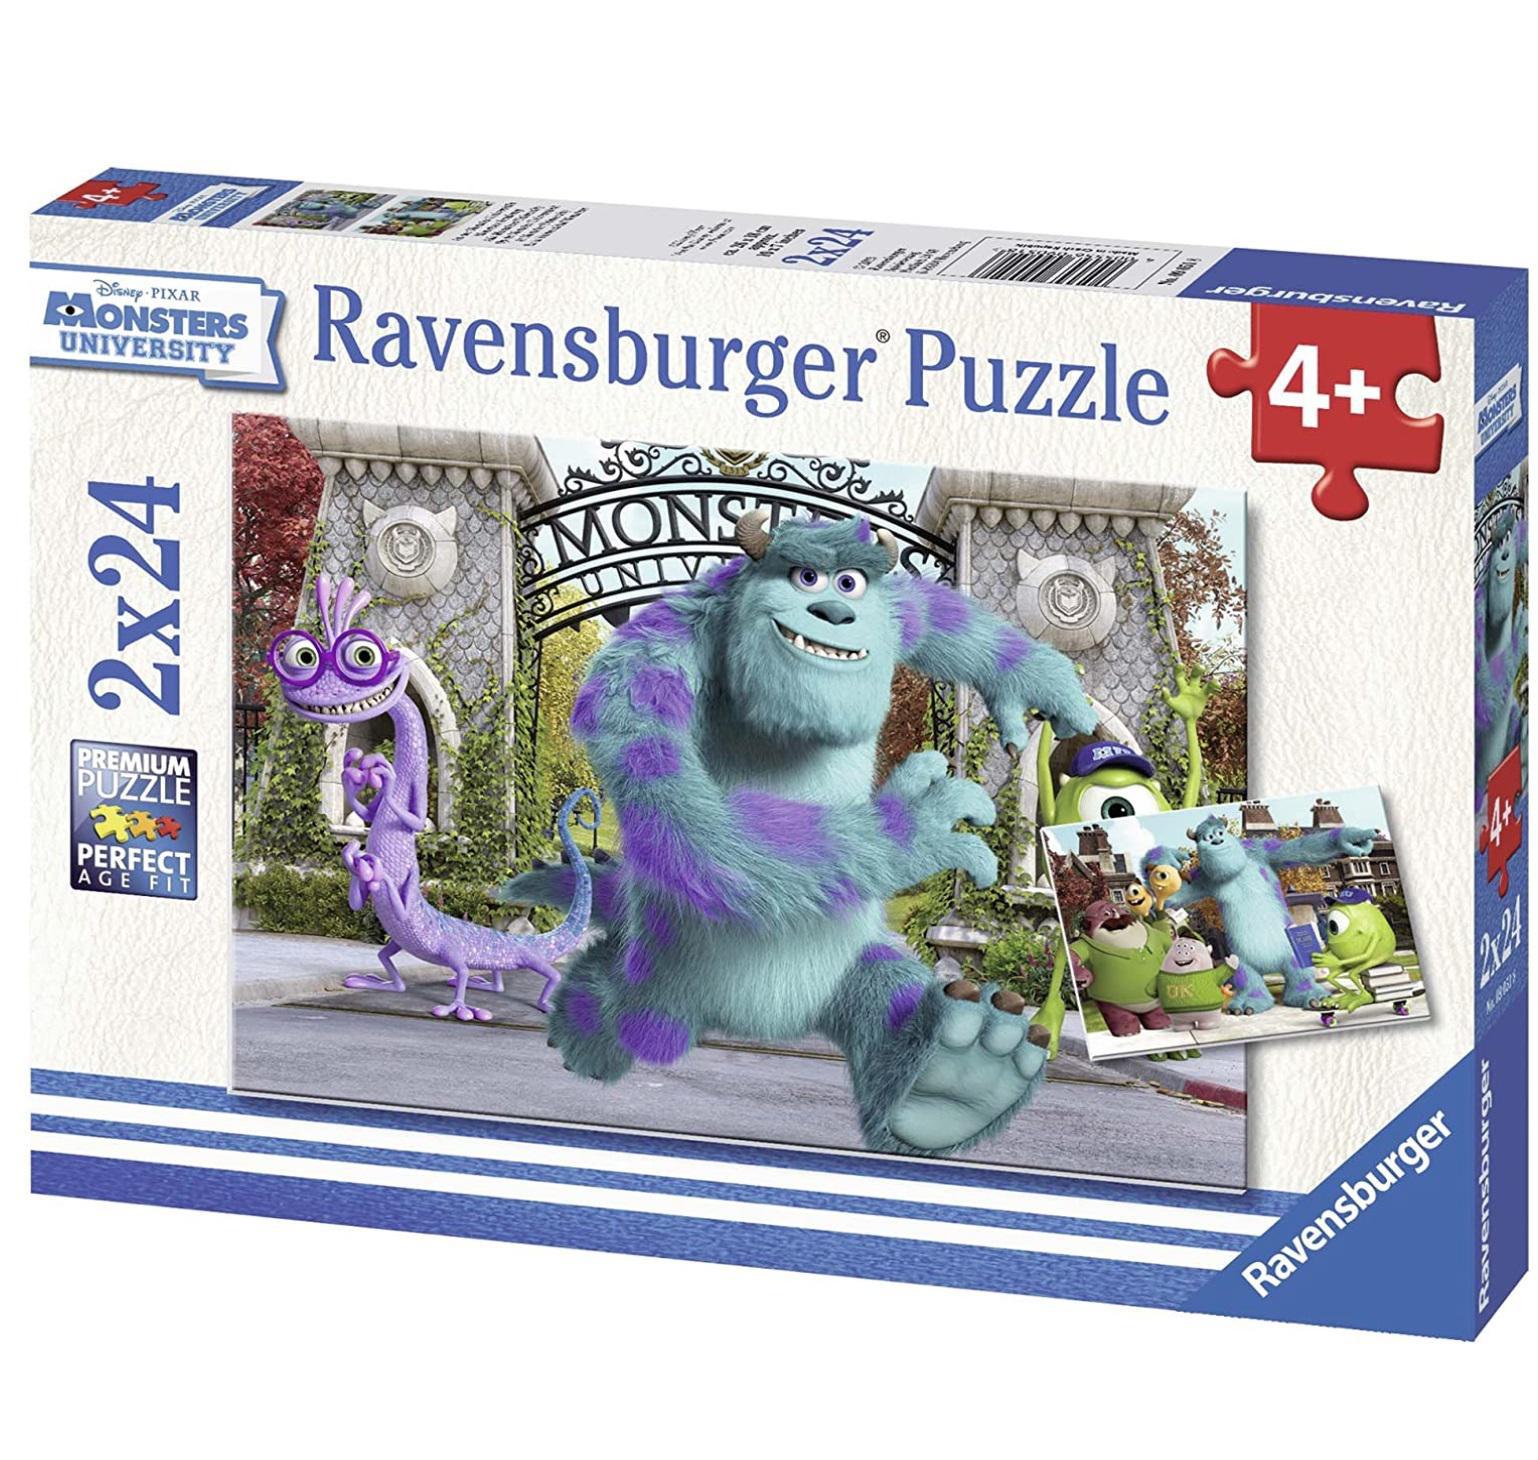 Jigsaw puzzle Disney Pixar - Characters